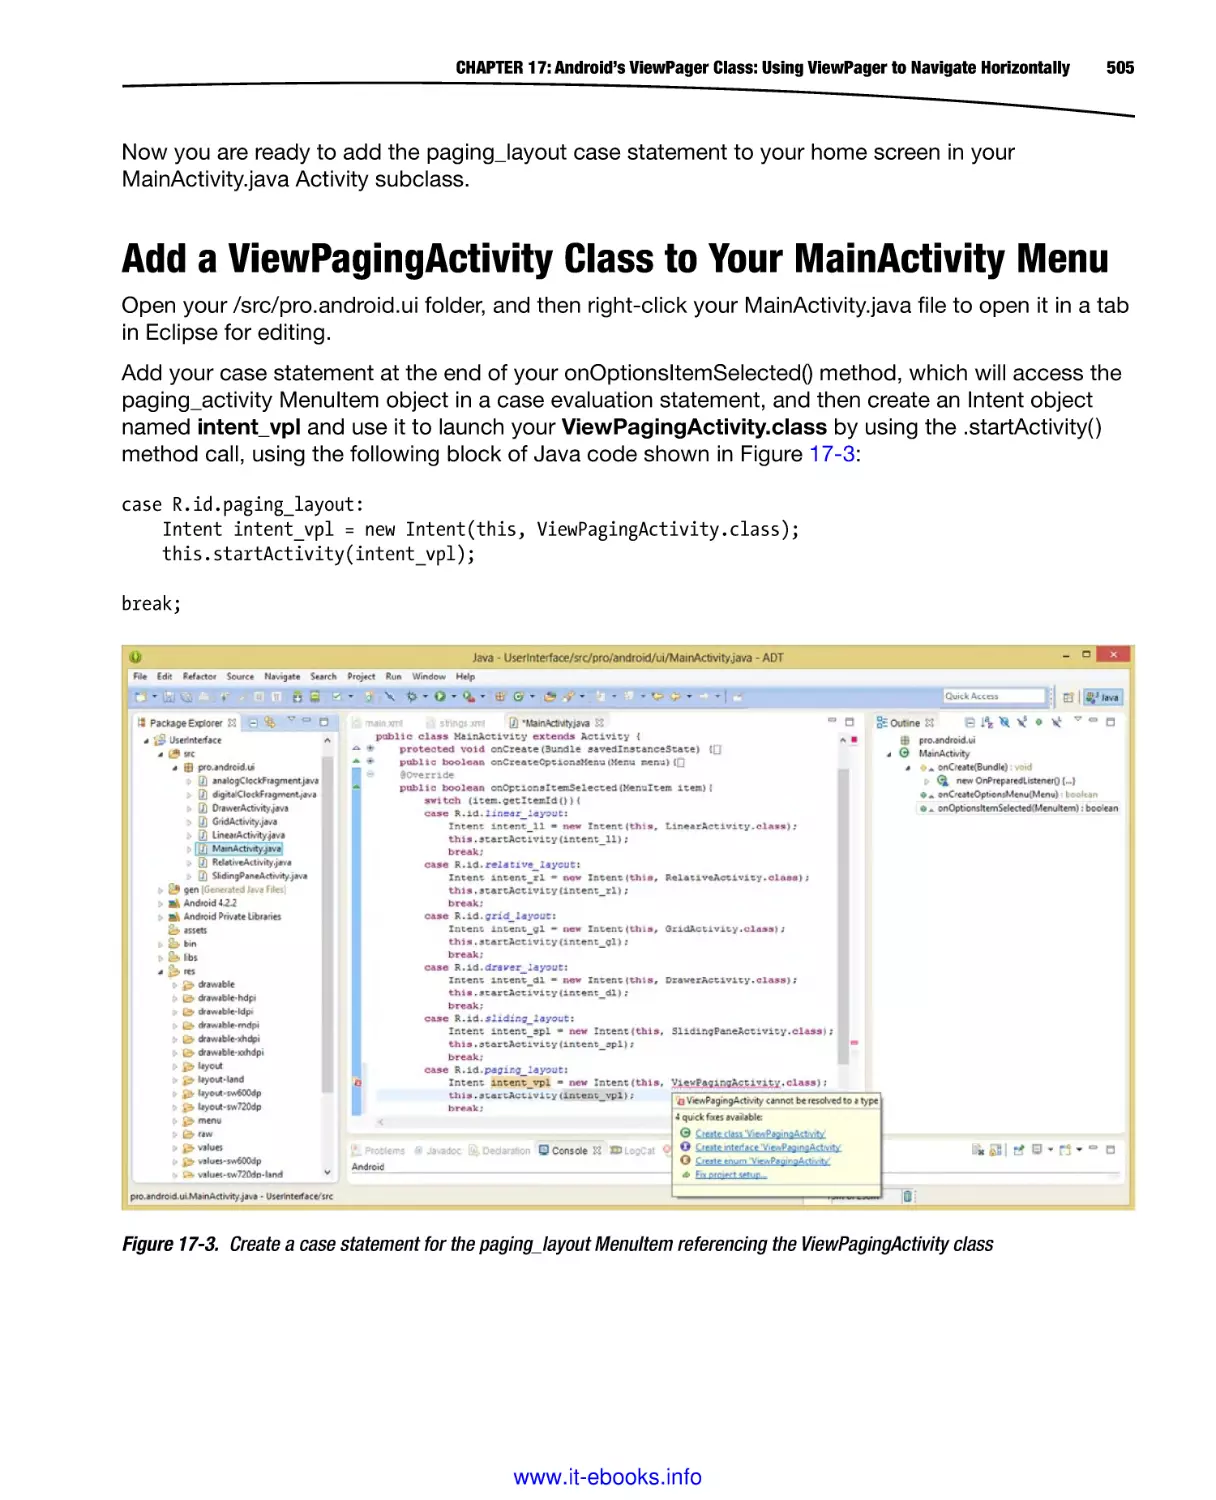 Add a ViewPagingActivity Class to Your MainActivity Menu